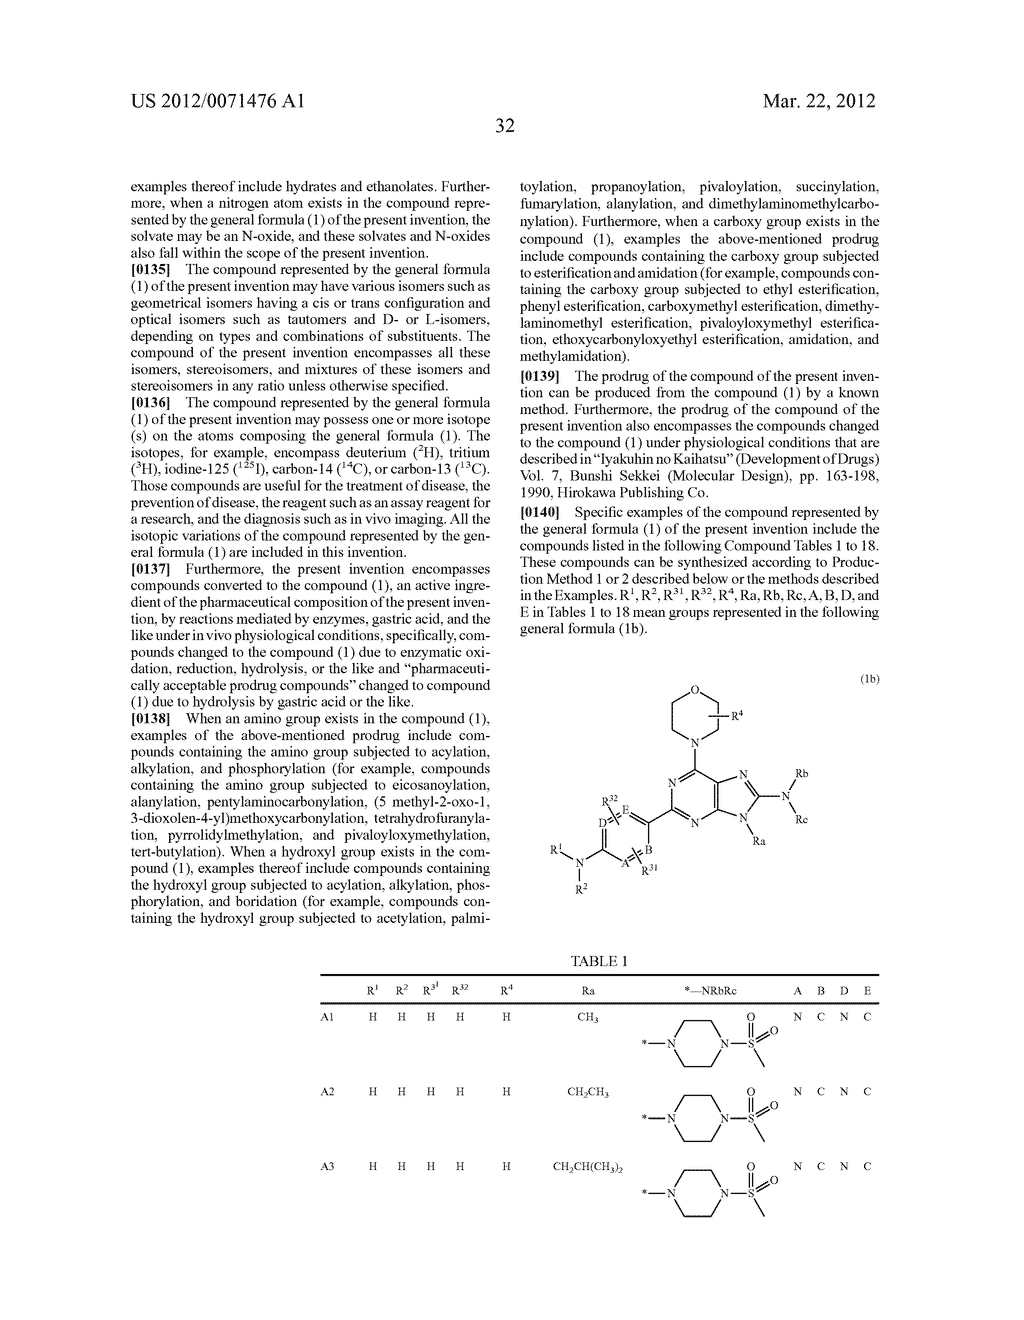 MORPHOLINOPURINE DERIVATIVES - diagram, schematic, and image 33